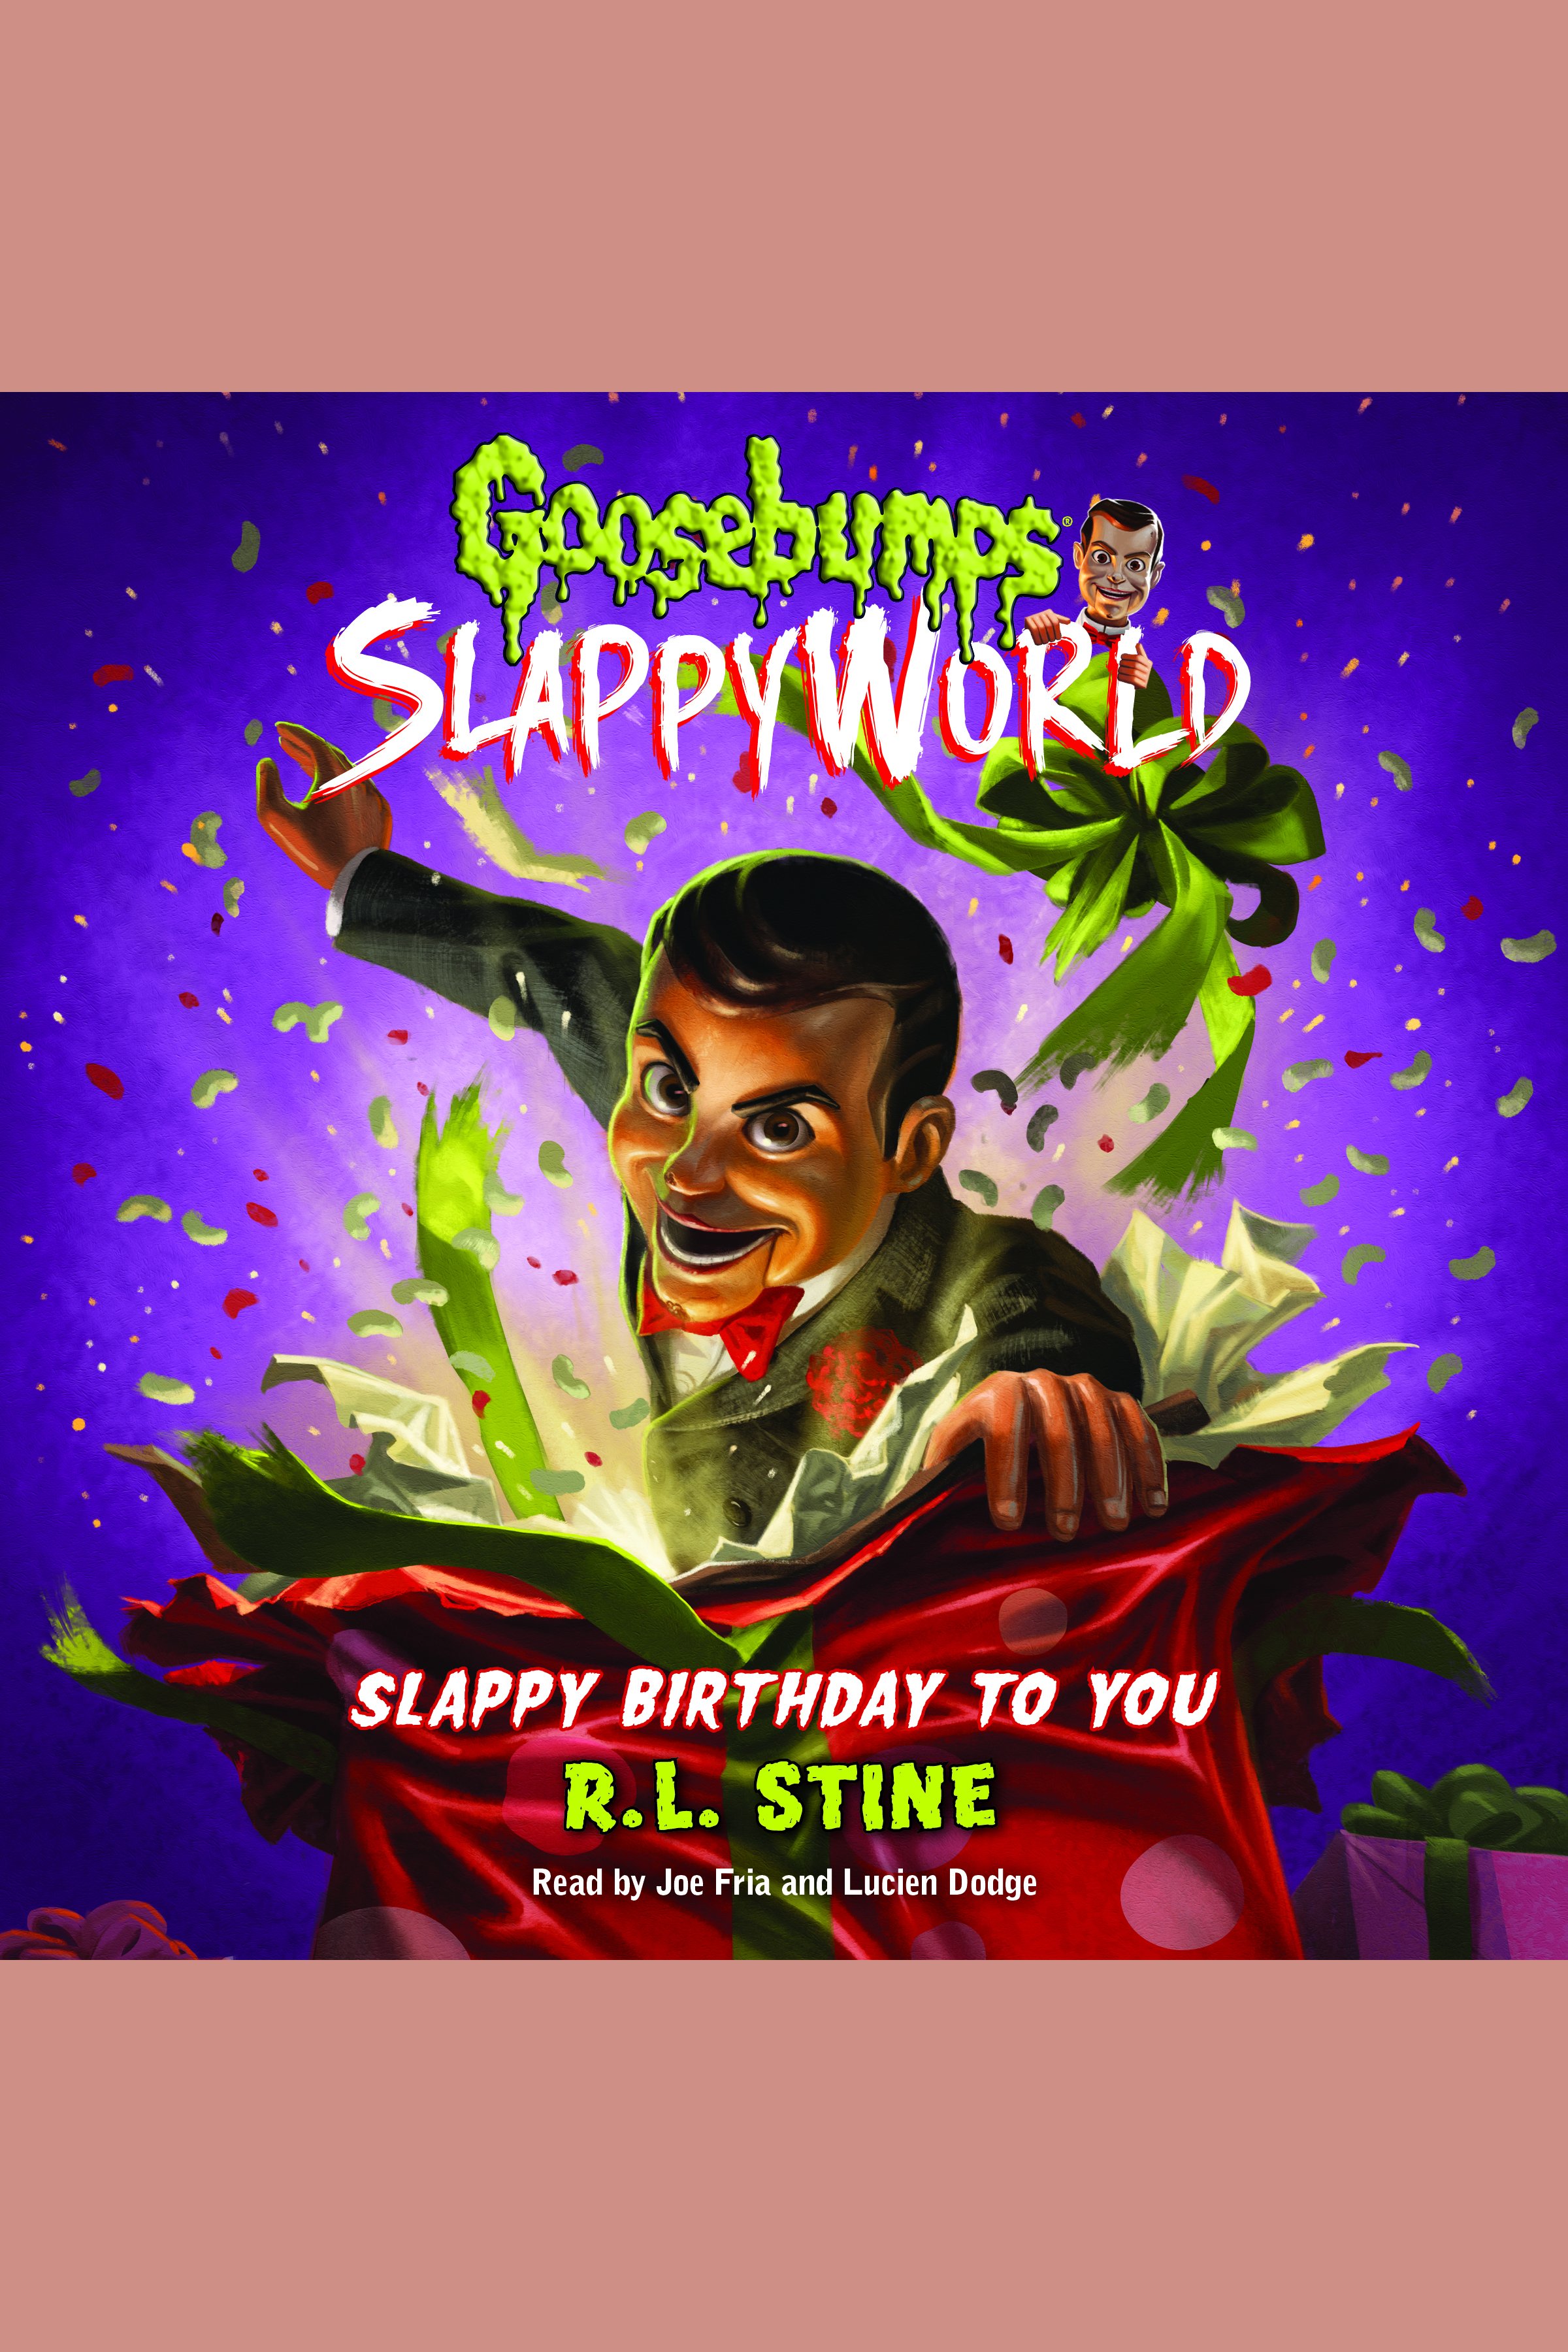 Slappy birthday to you cover image